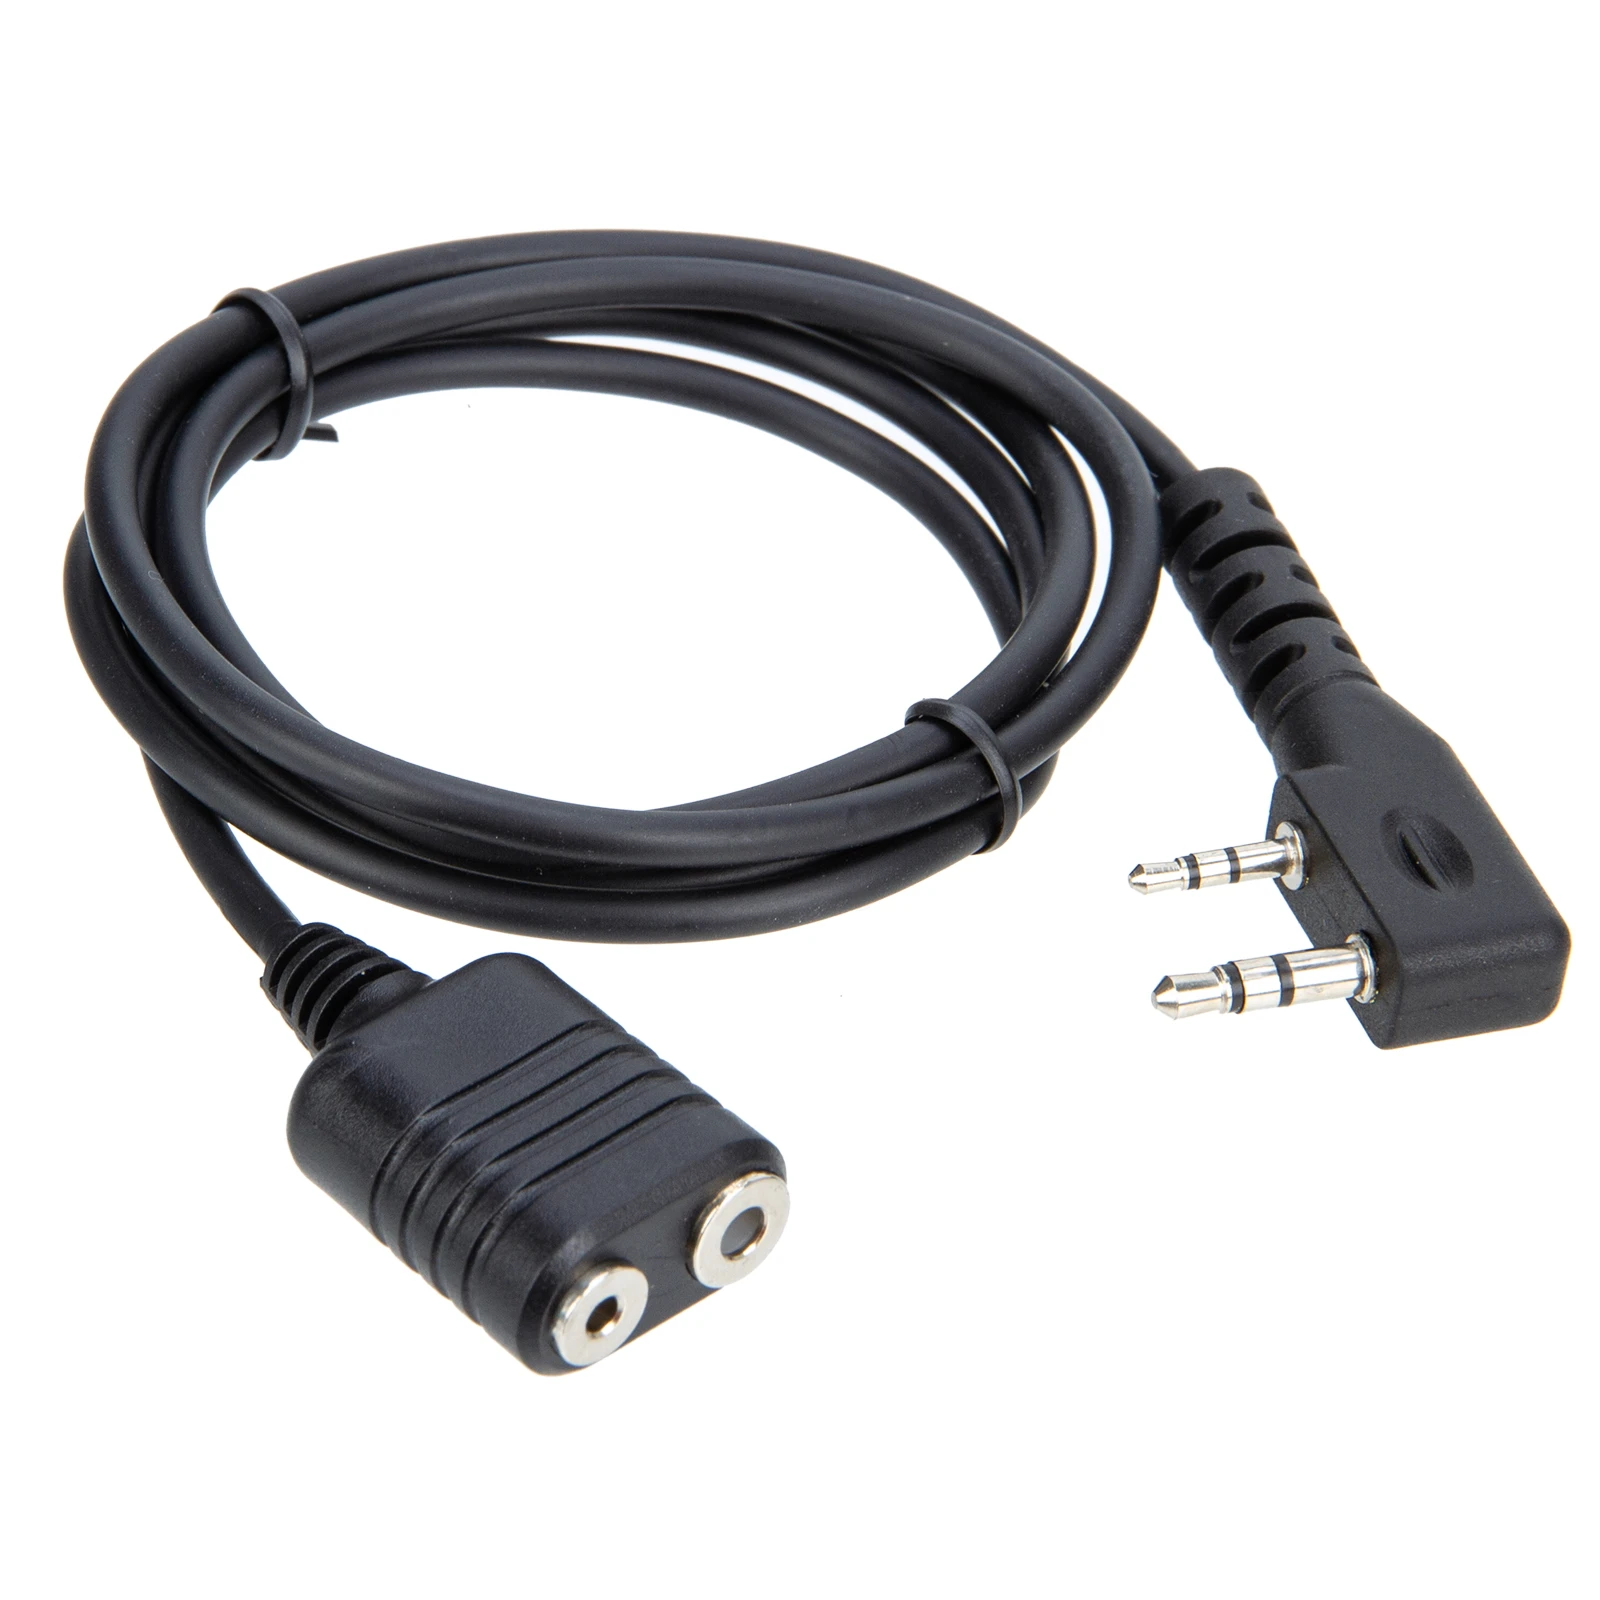 K тип 2 пинов високоговорител микрофон слушалки удължителен кабел за удължителен кабел за BaoFeng UV-5R BF-888s за Kenwood Walkie Talkie